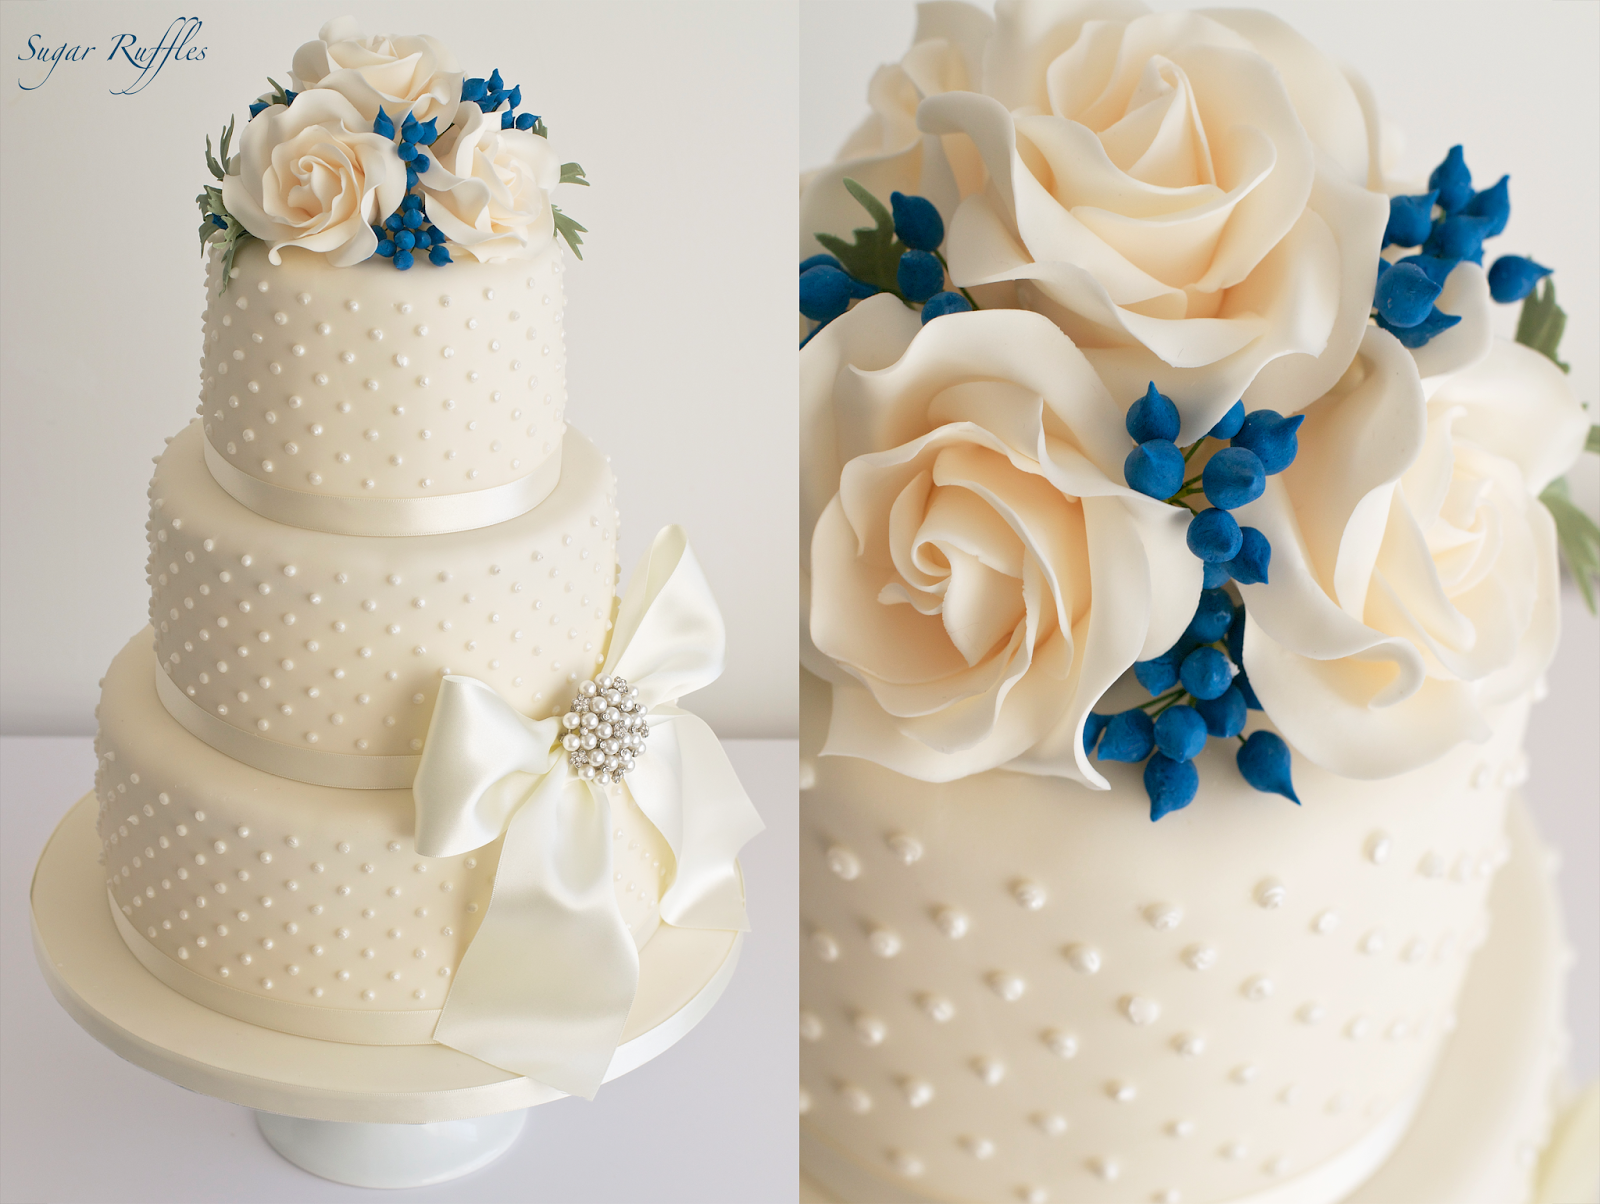 Sugar ruffles elegant wedding cakes